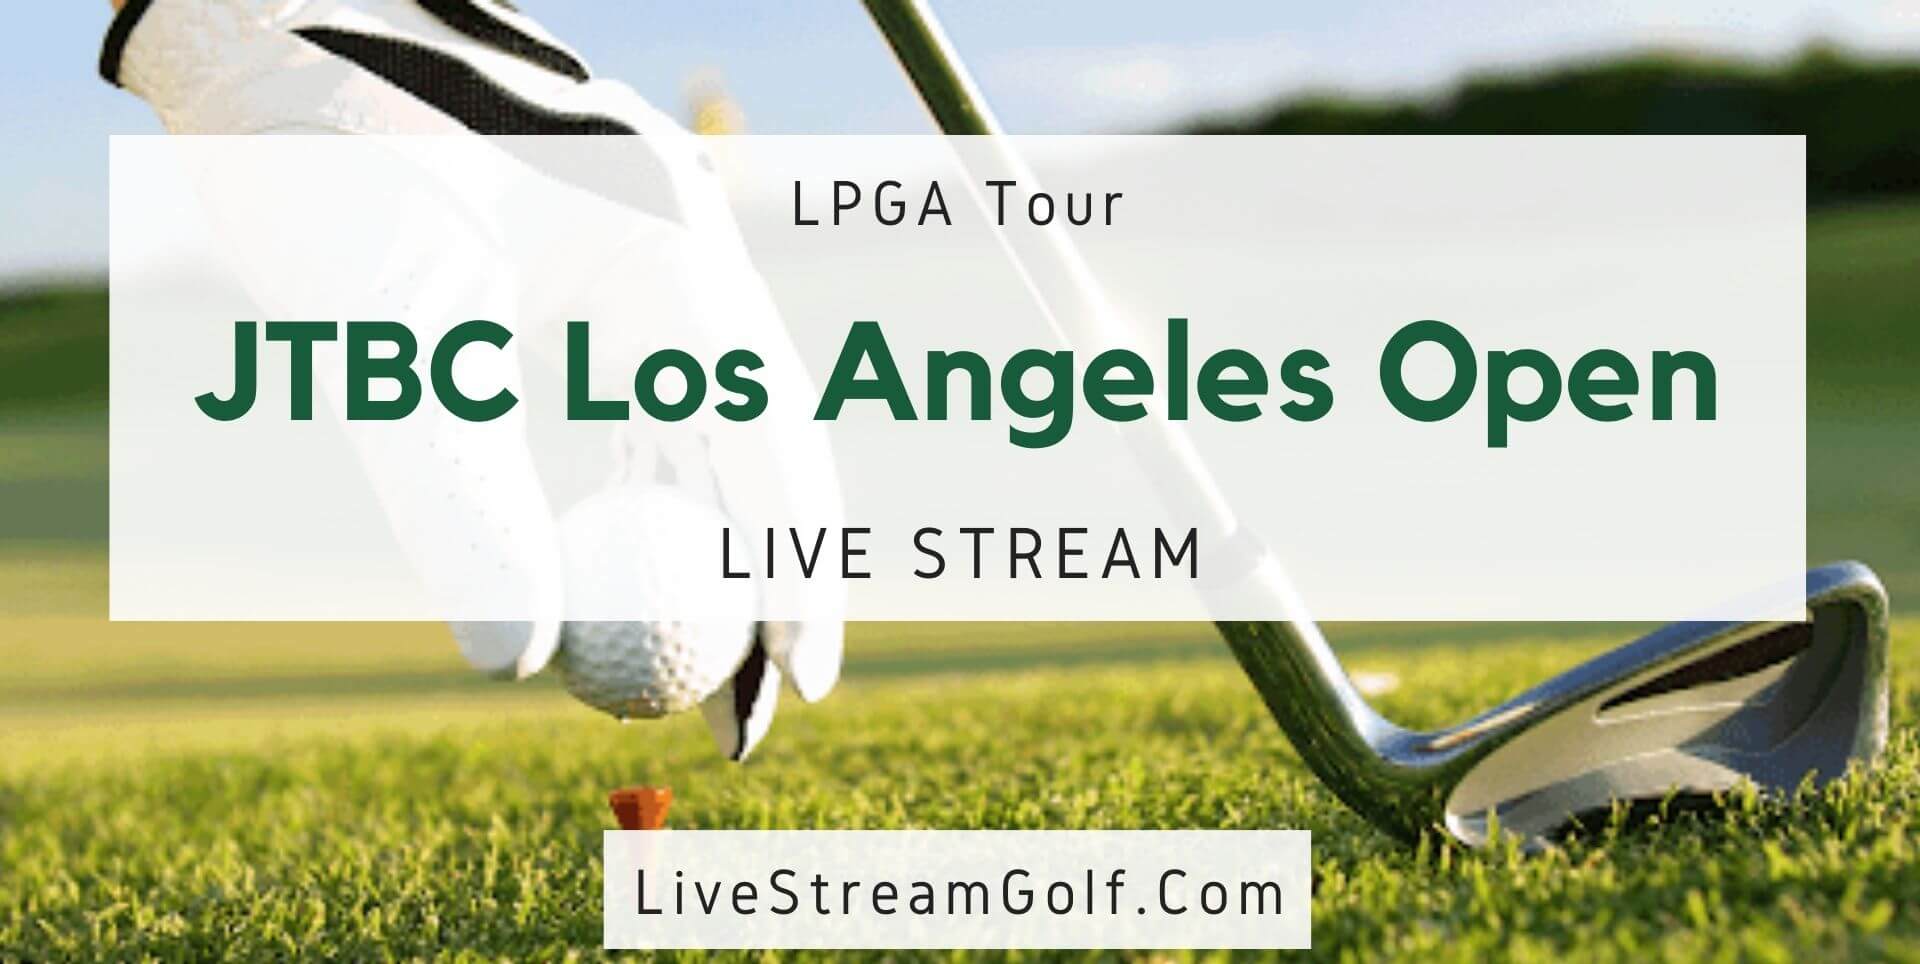 Los Angeles Open Live Stream JTBC LPGA